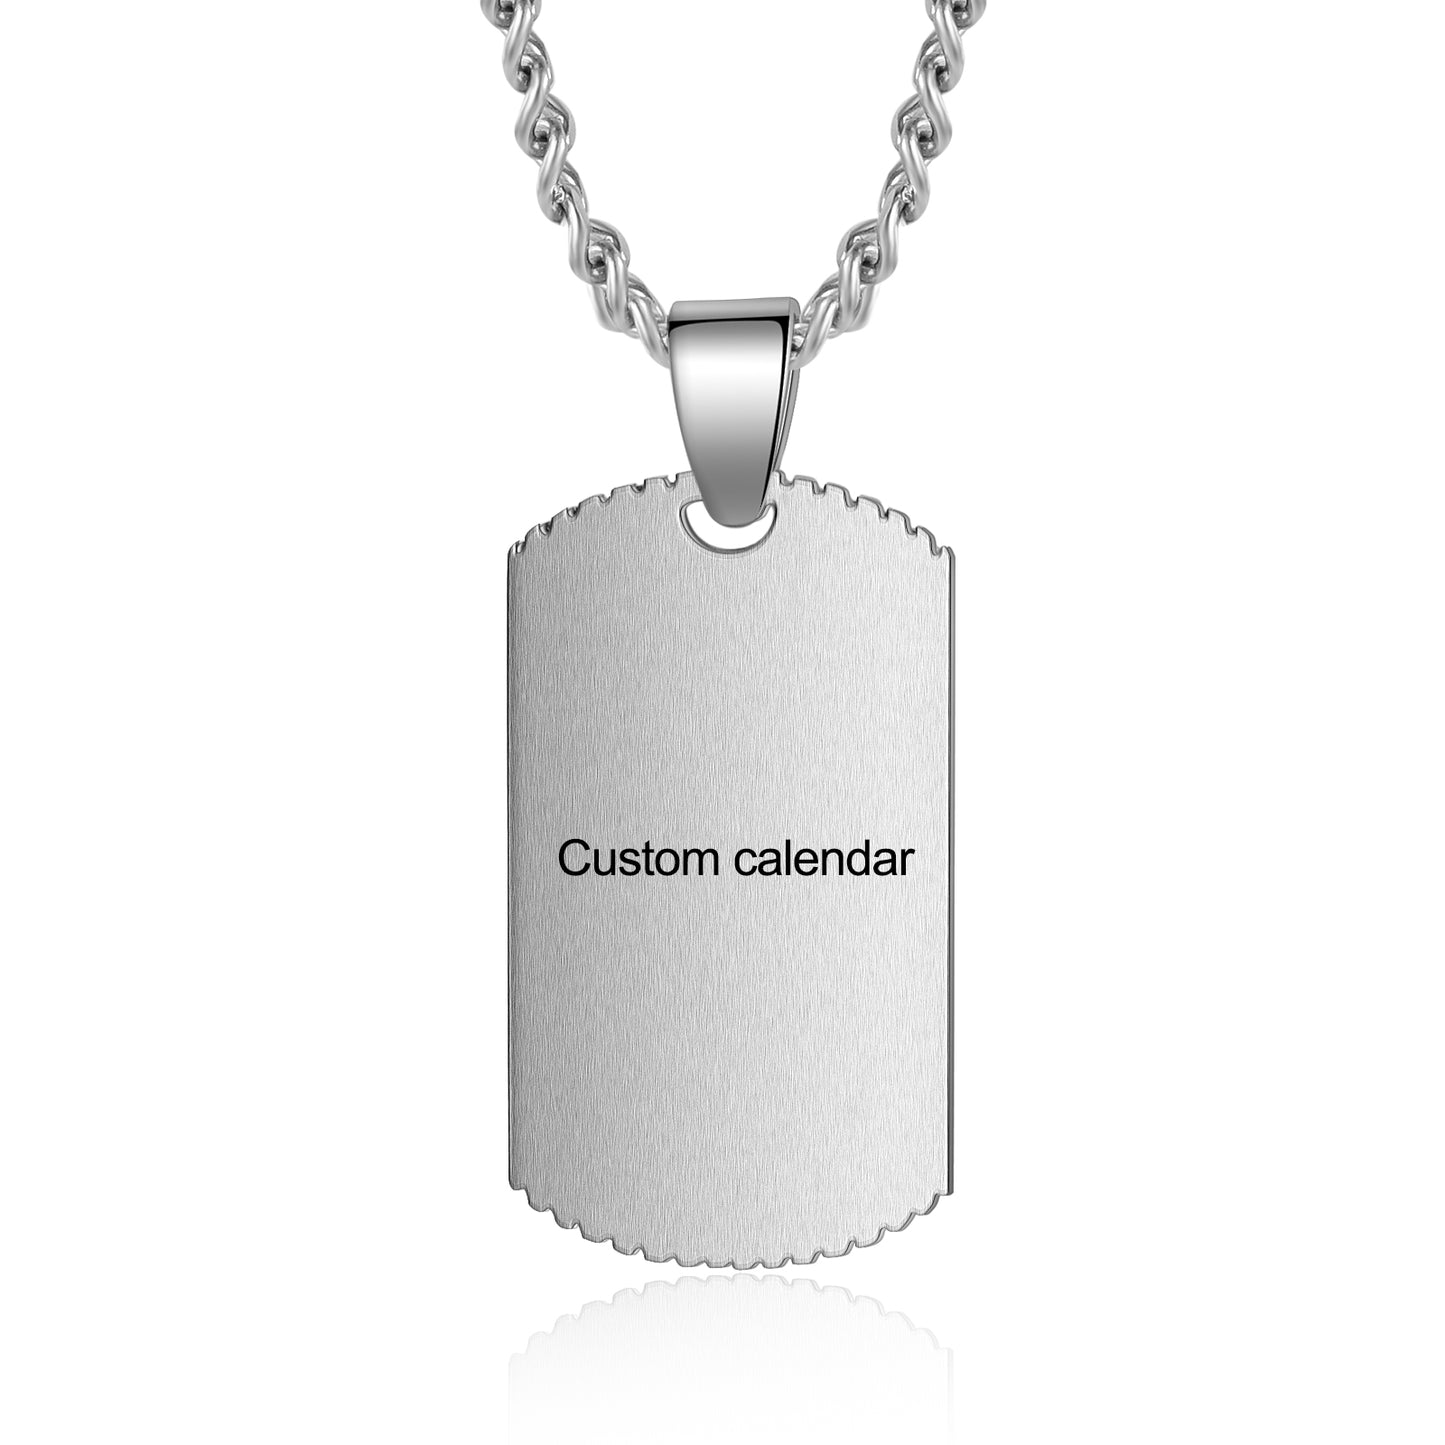 Custom Clendar Necklace